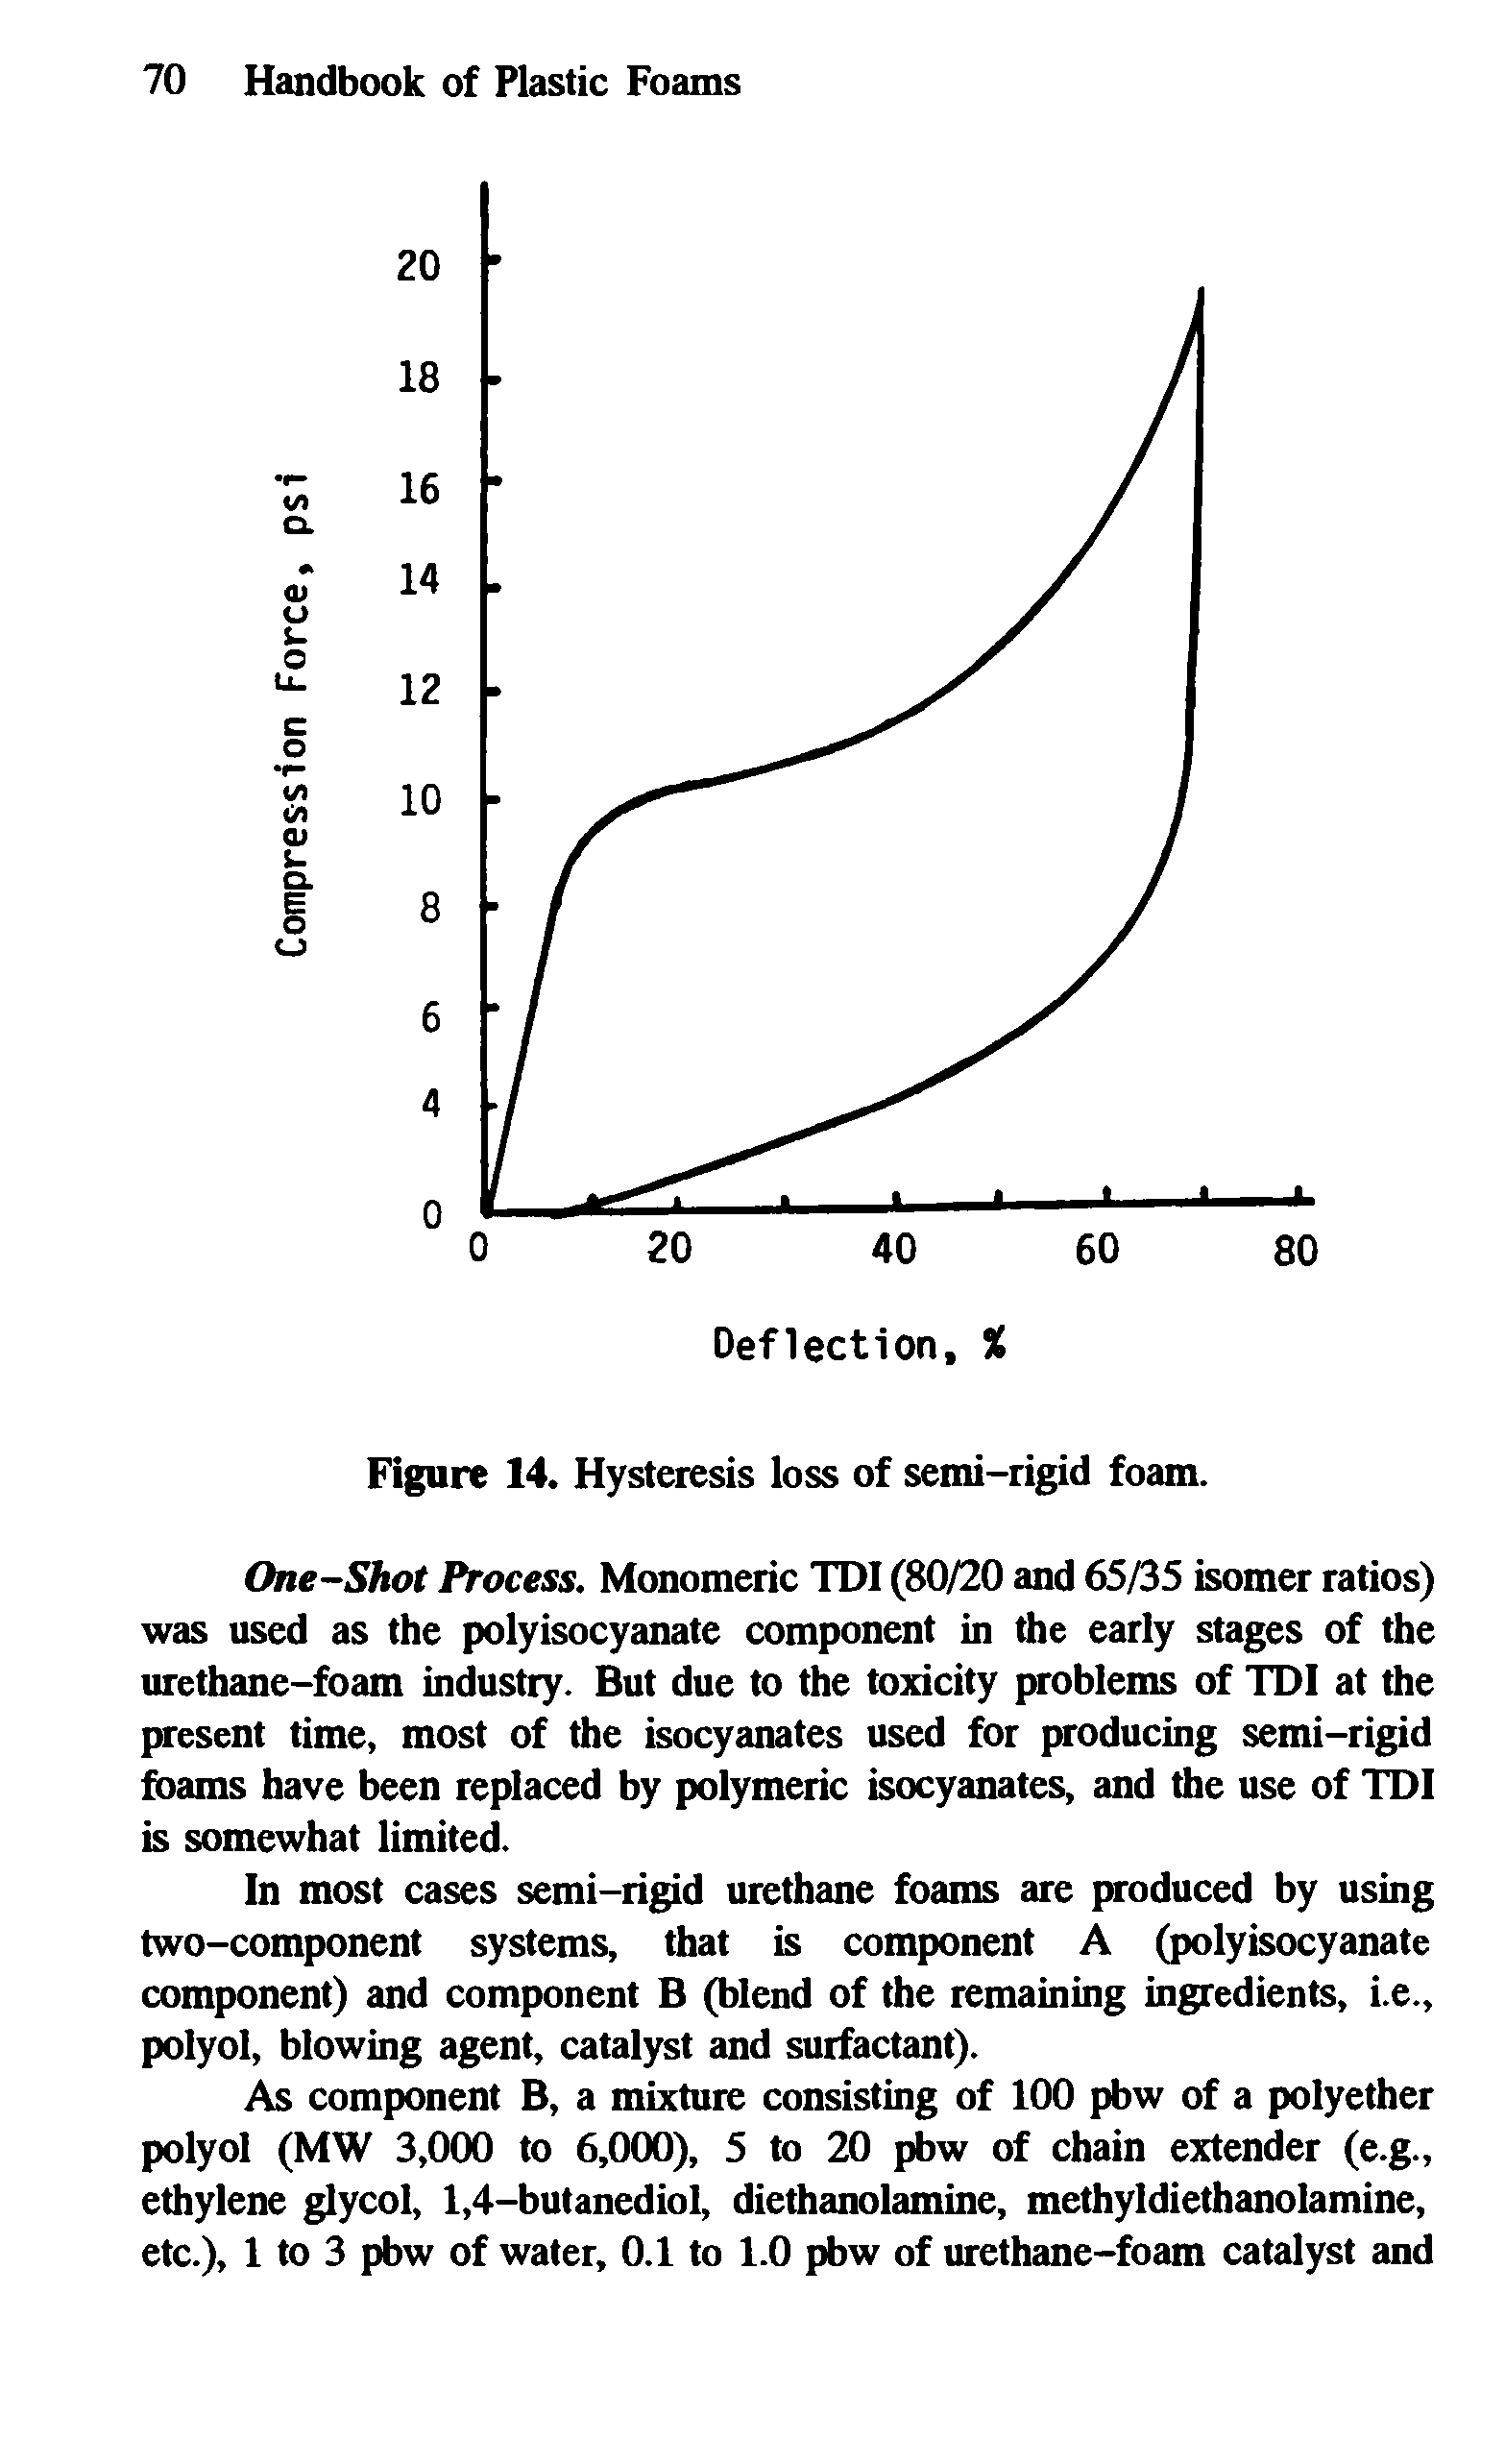 Figure 14. Hysteresis loss of semi-rigid foam.